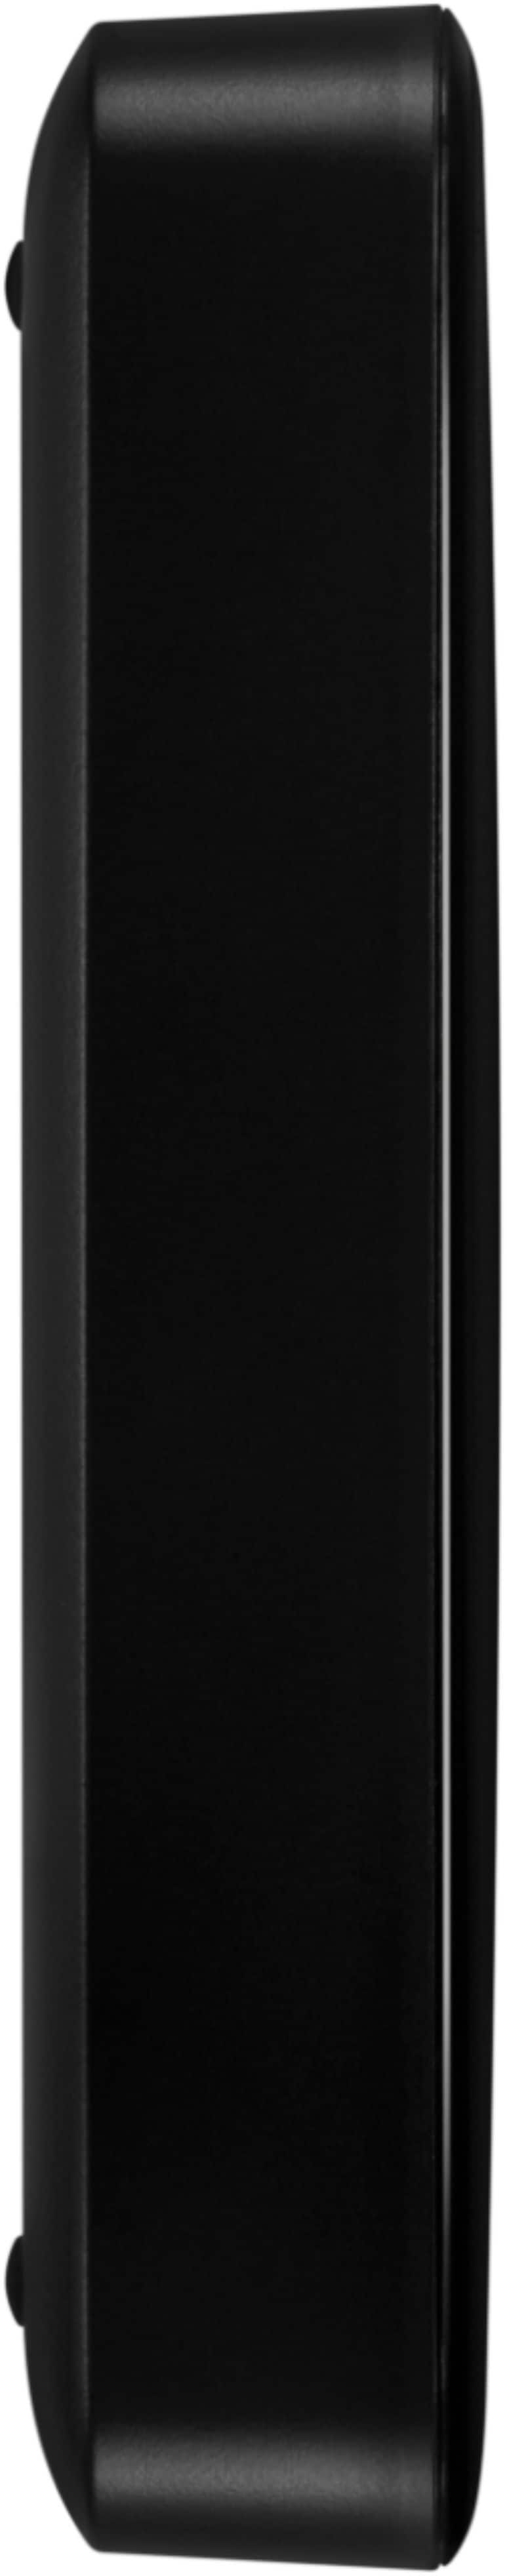 WD - Easystore 4TB External USB 3.0 Portable Hard Drive - Black_6